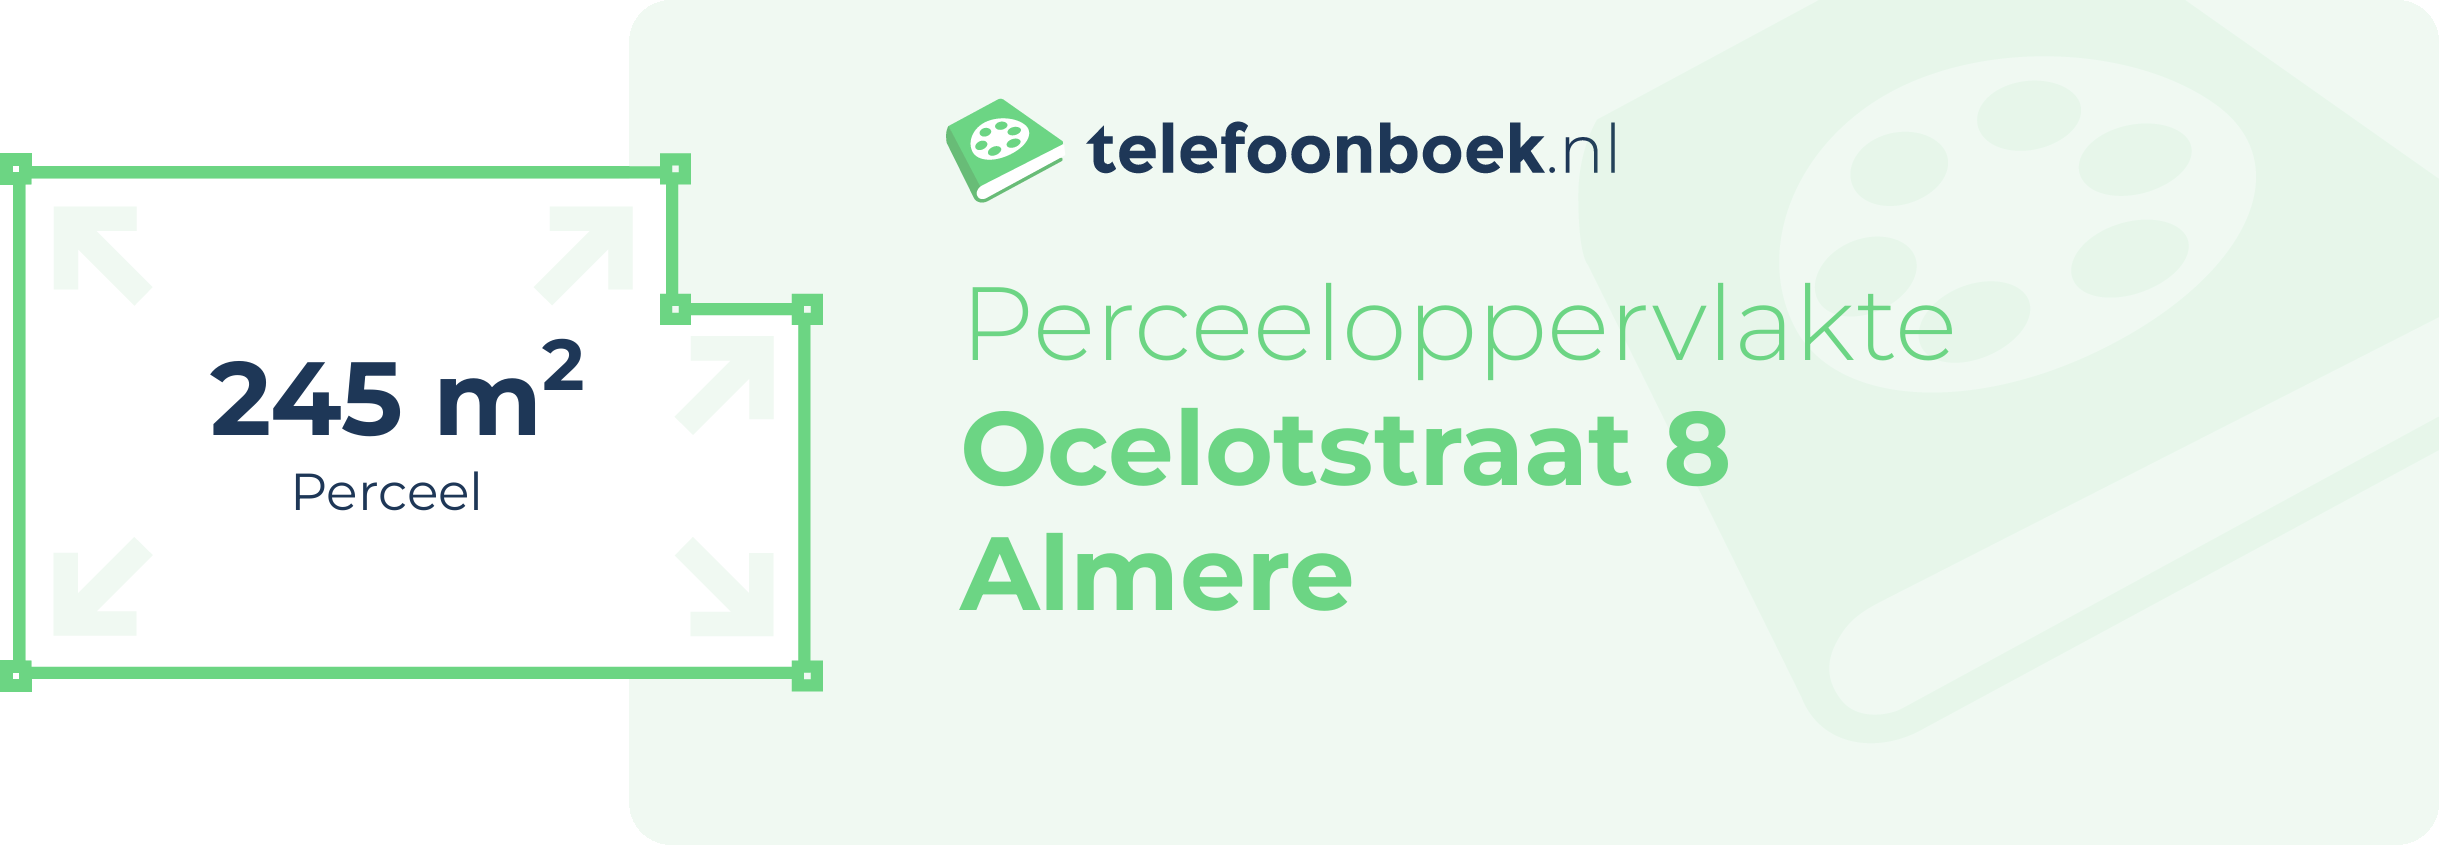 Perceeloppervlakte Ocelotstraat 8 Almere